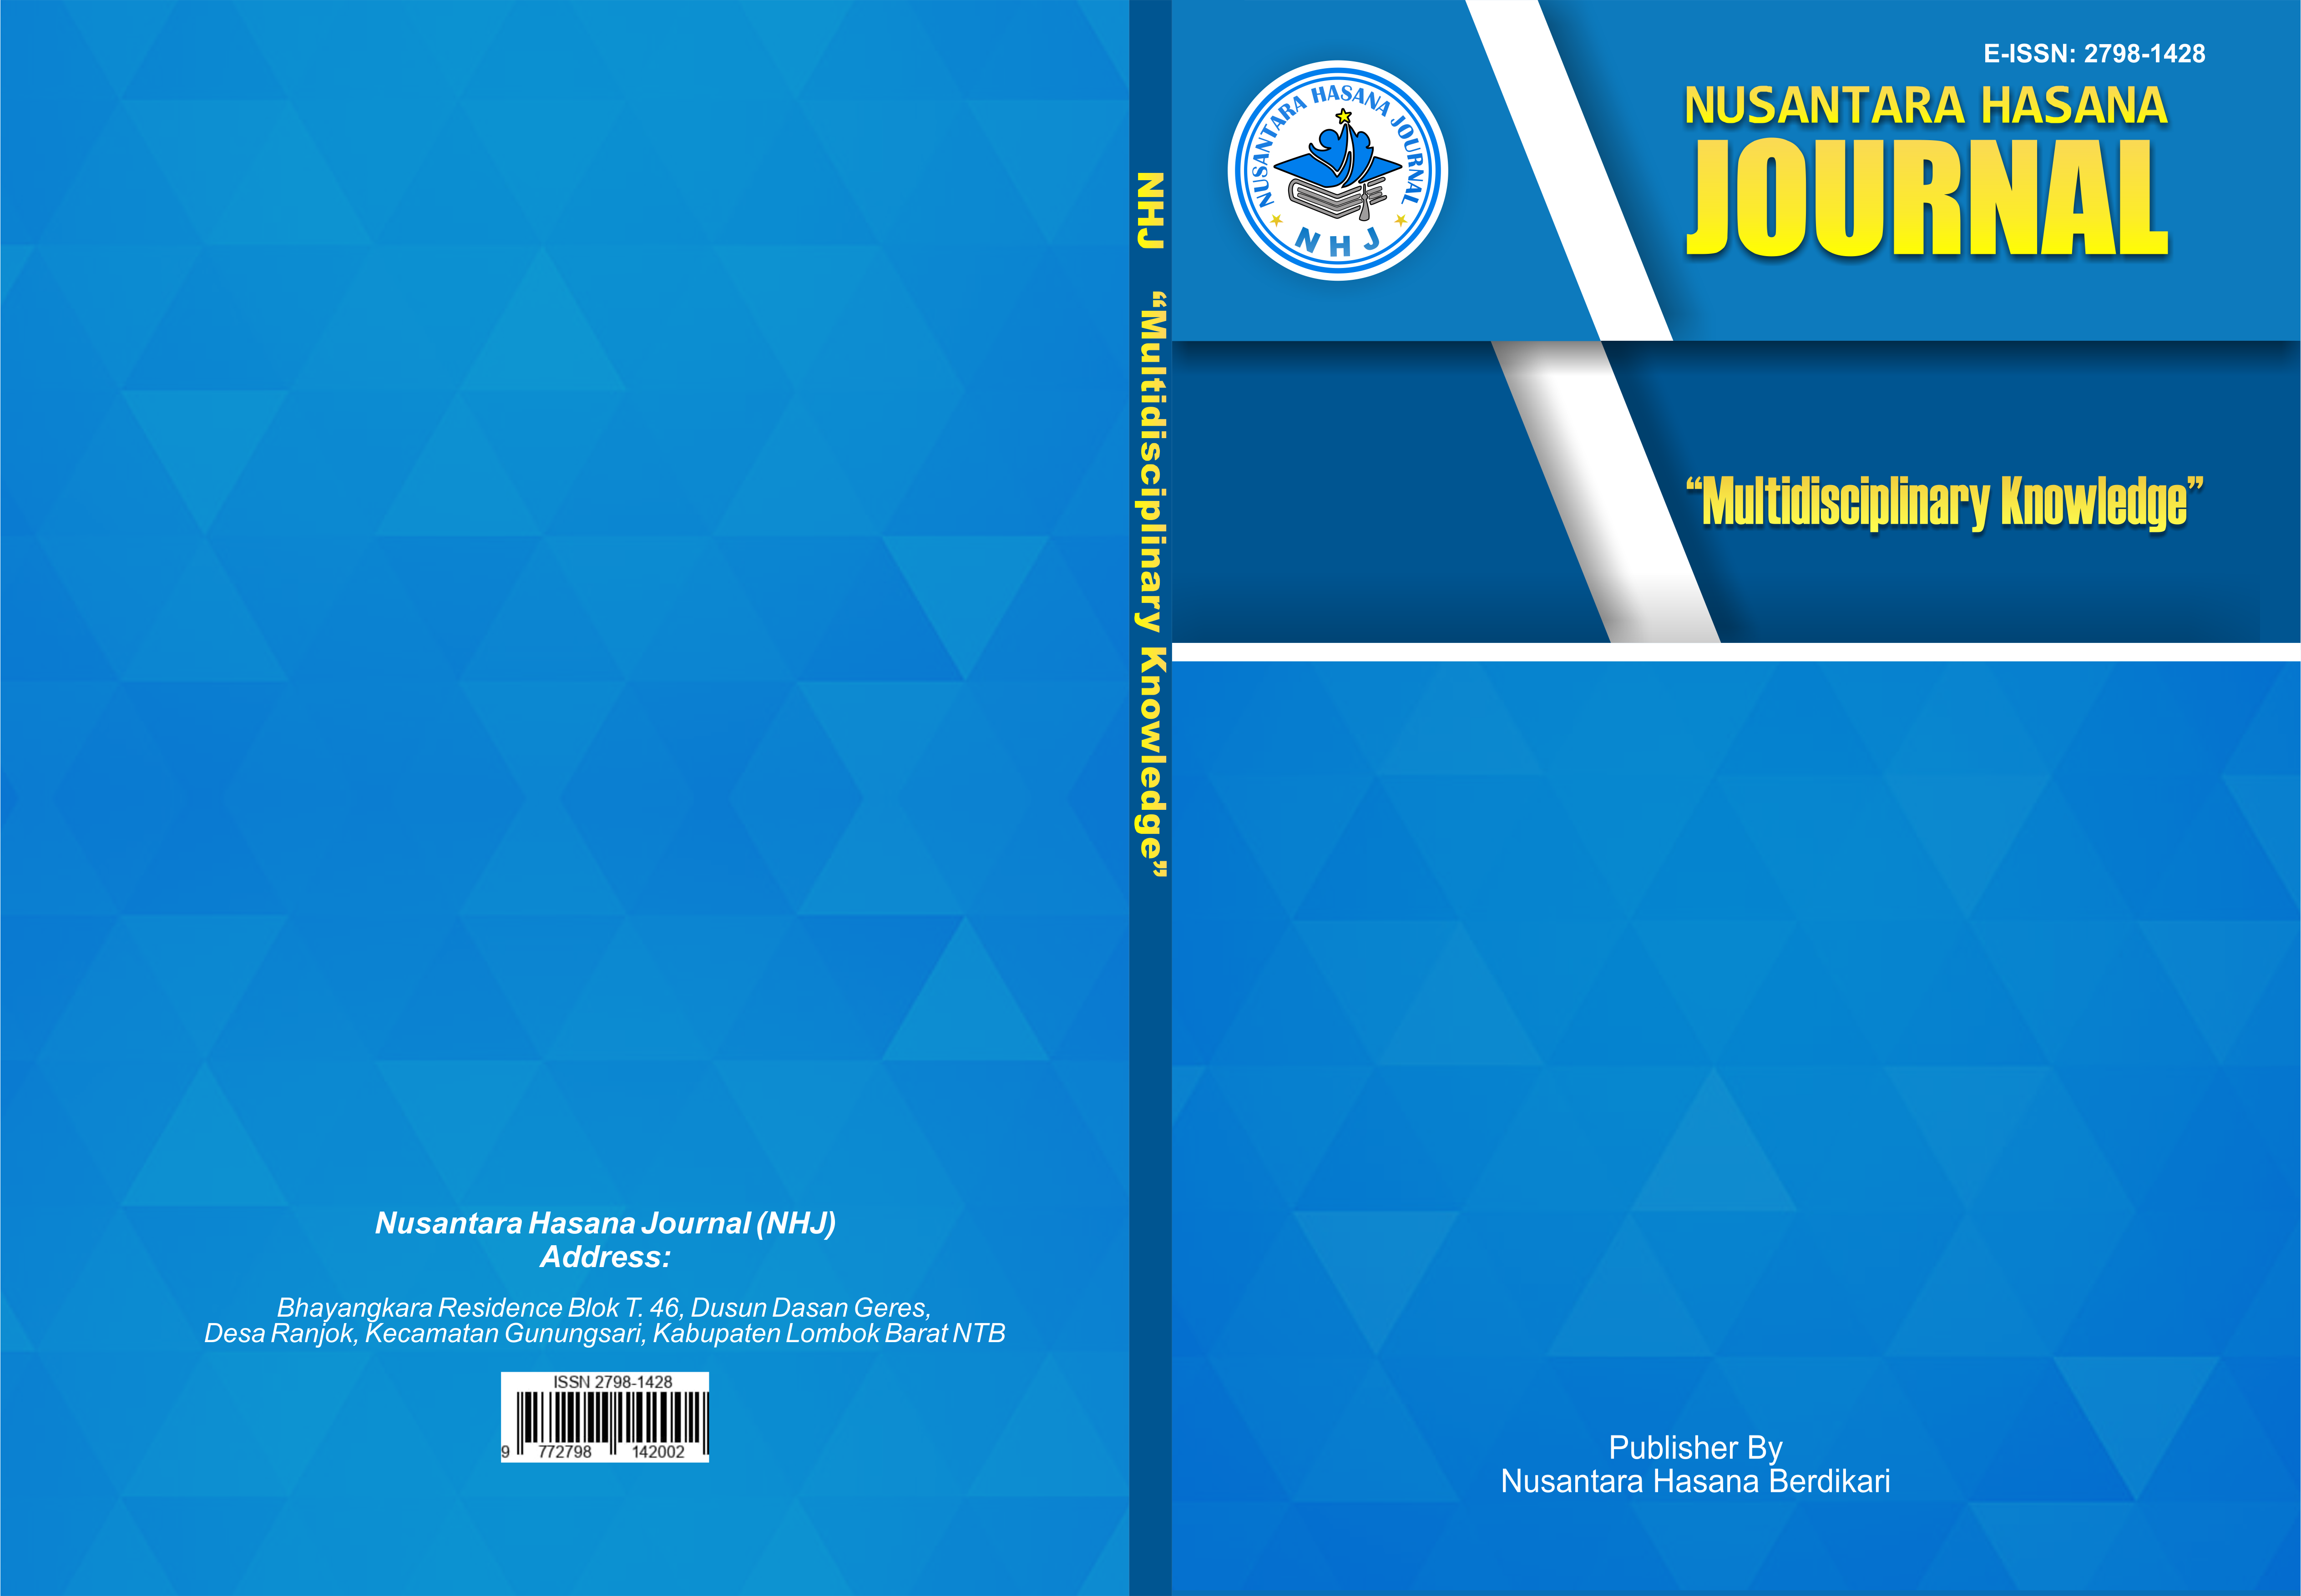 					View Vol. 1 No. 3 (2021): Vol. 1 No. 3 (2021): Nusantara Hasana Journal, August 2021
				